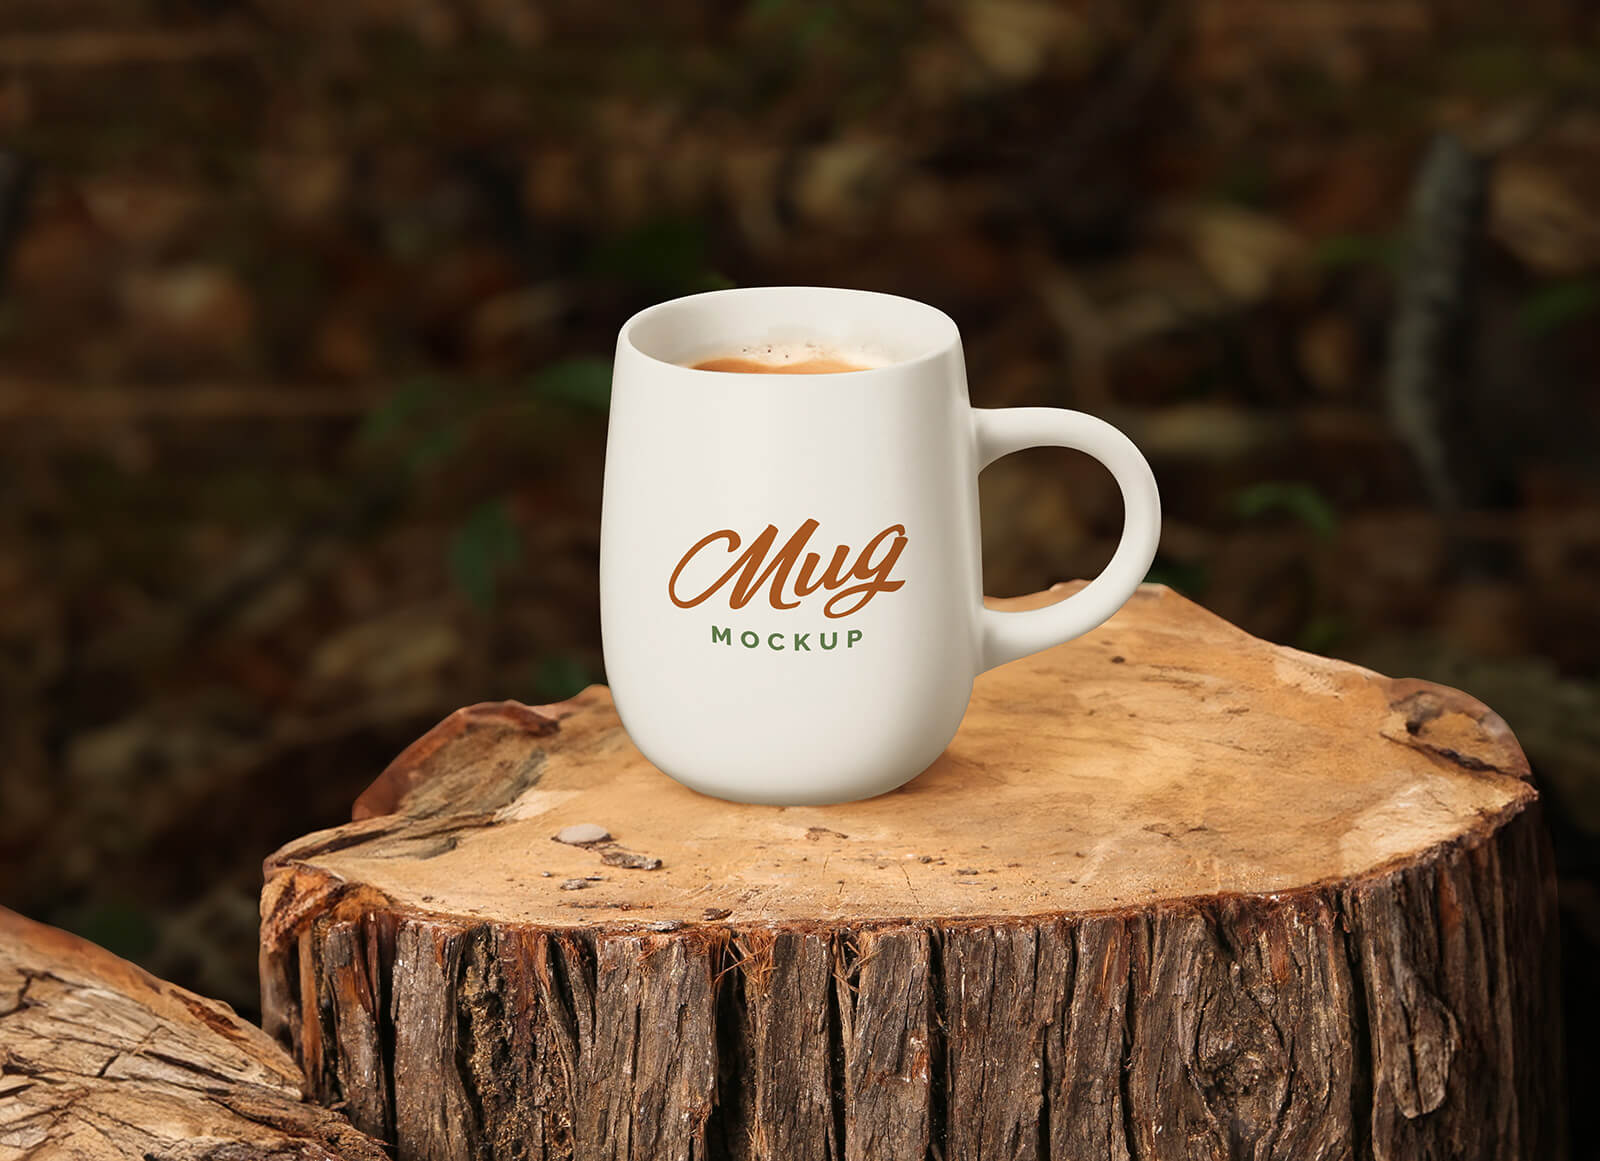 Free-Coffee-Mug-Mockup-PSD